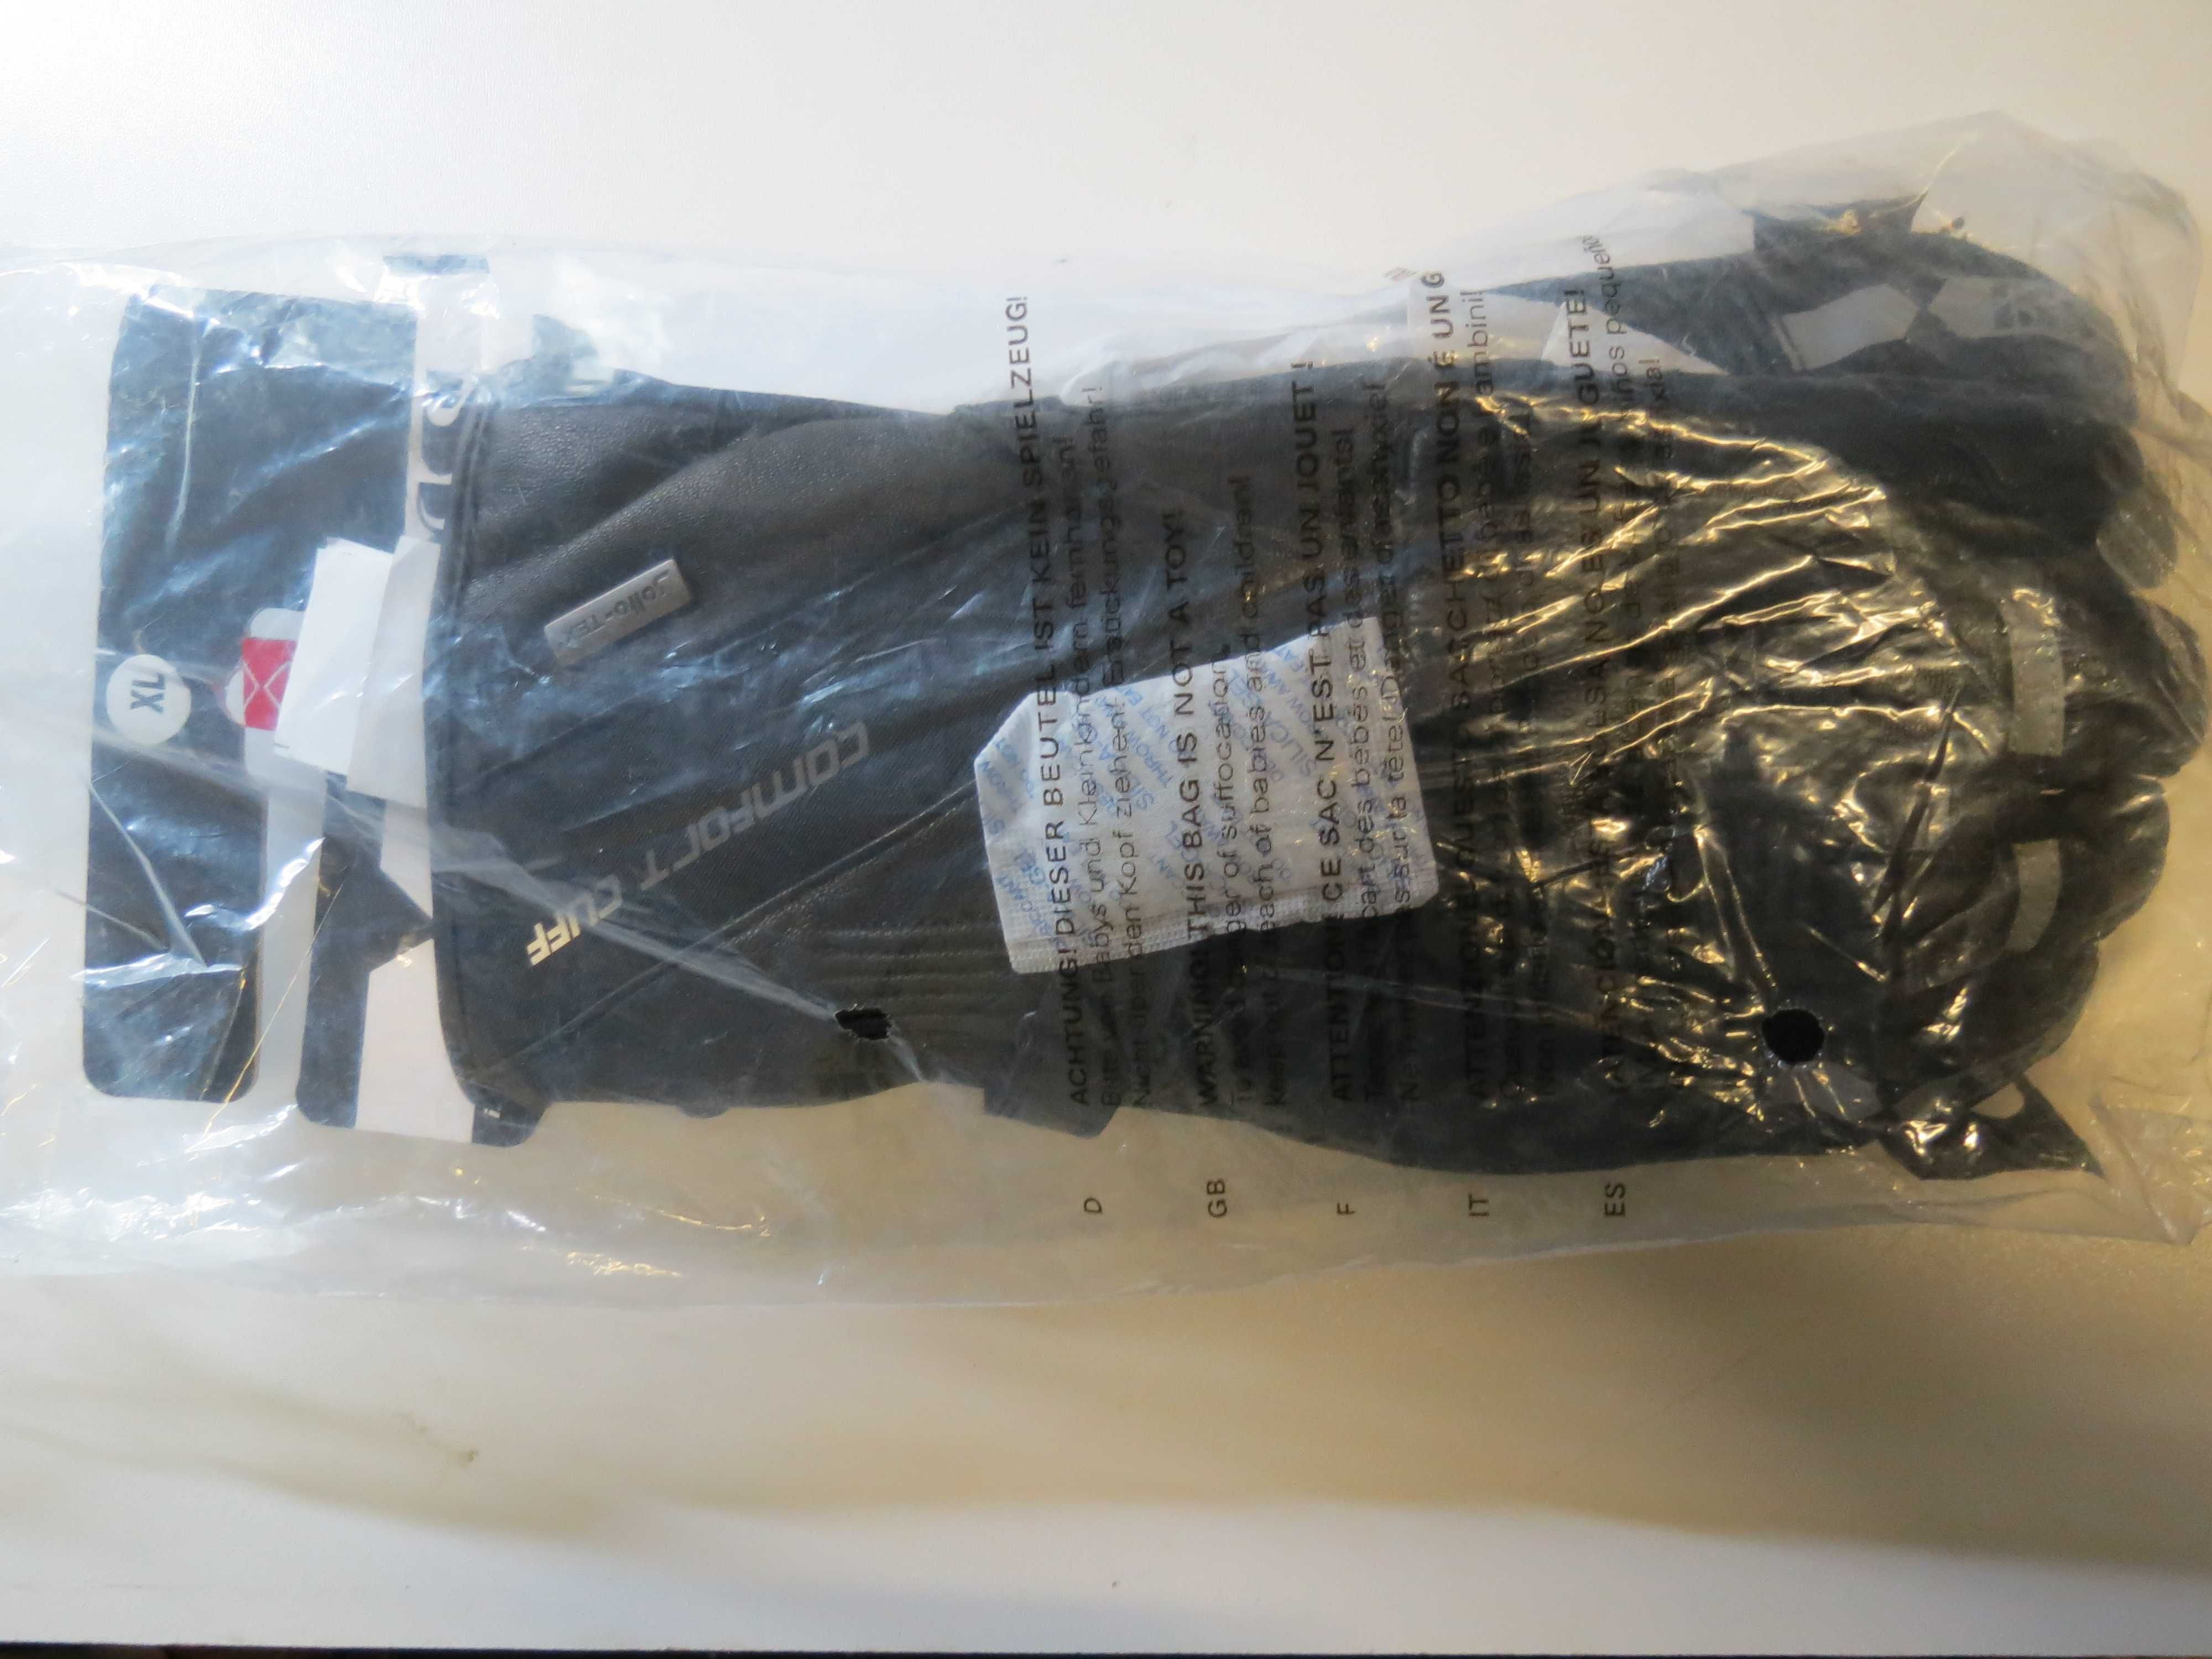 Мотоперчатки IXS Tour Glove TIGON-ST black XL